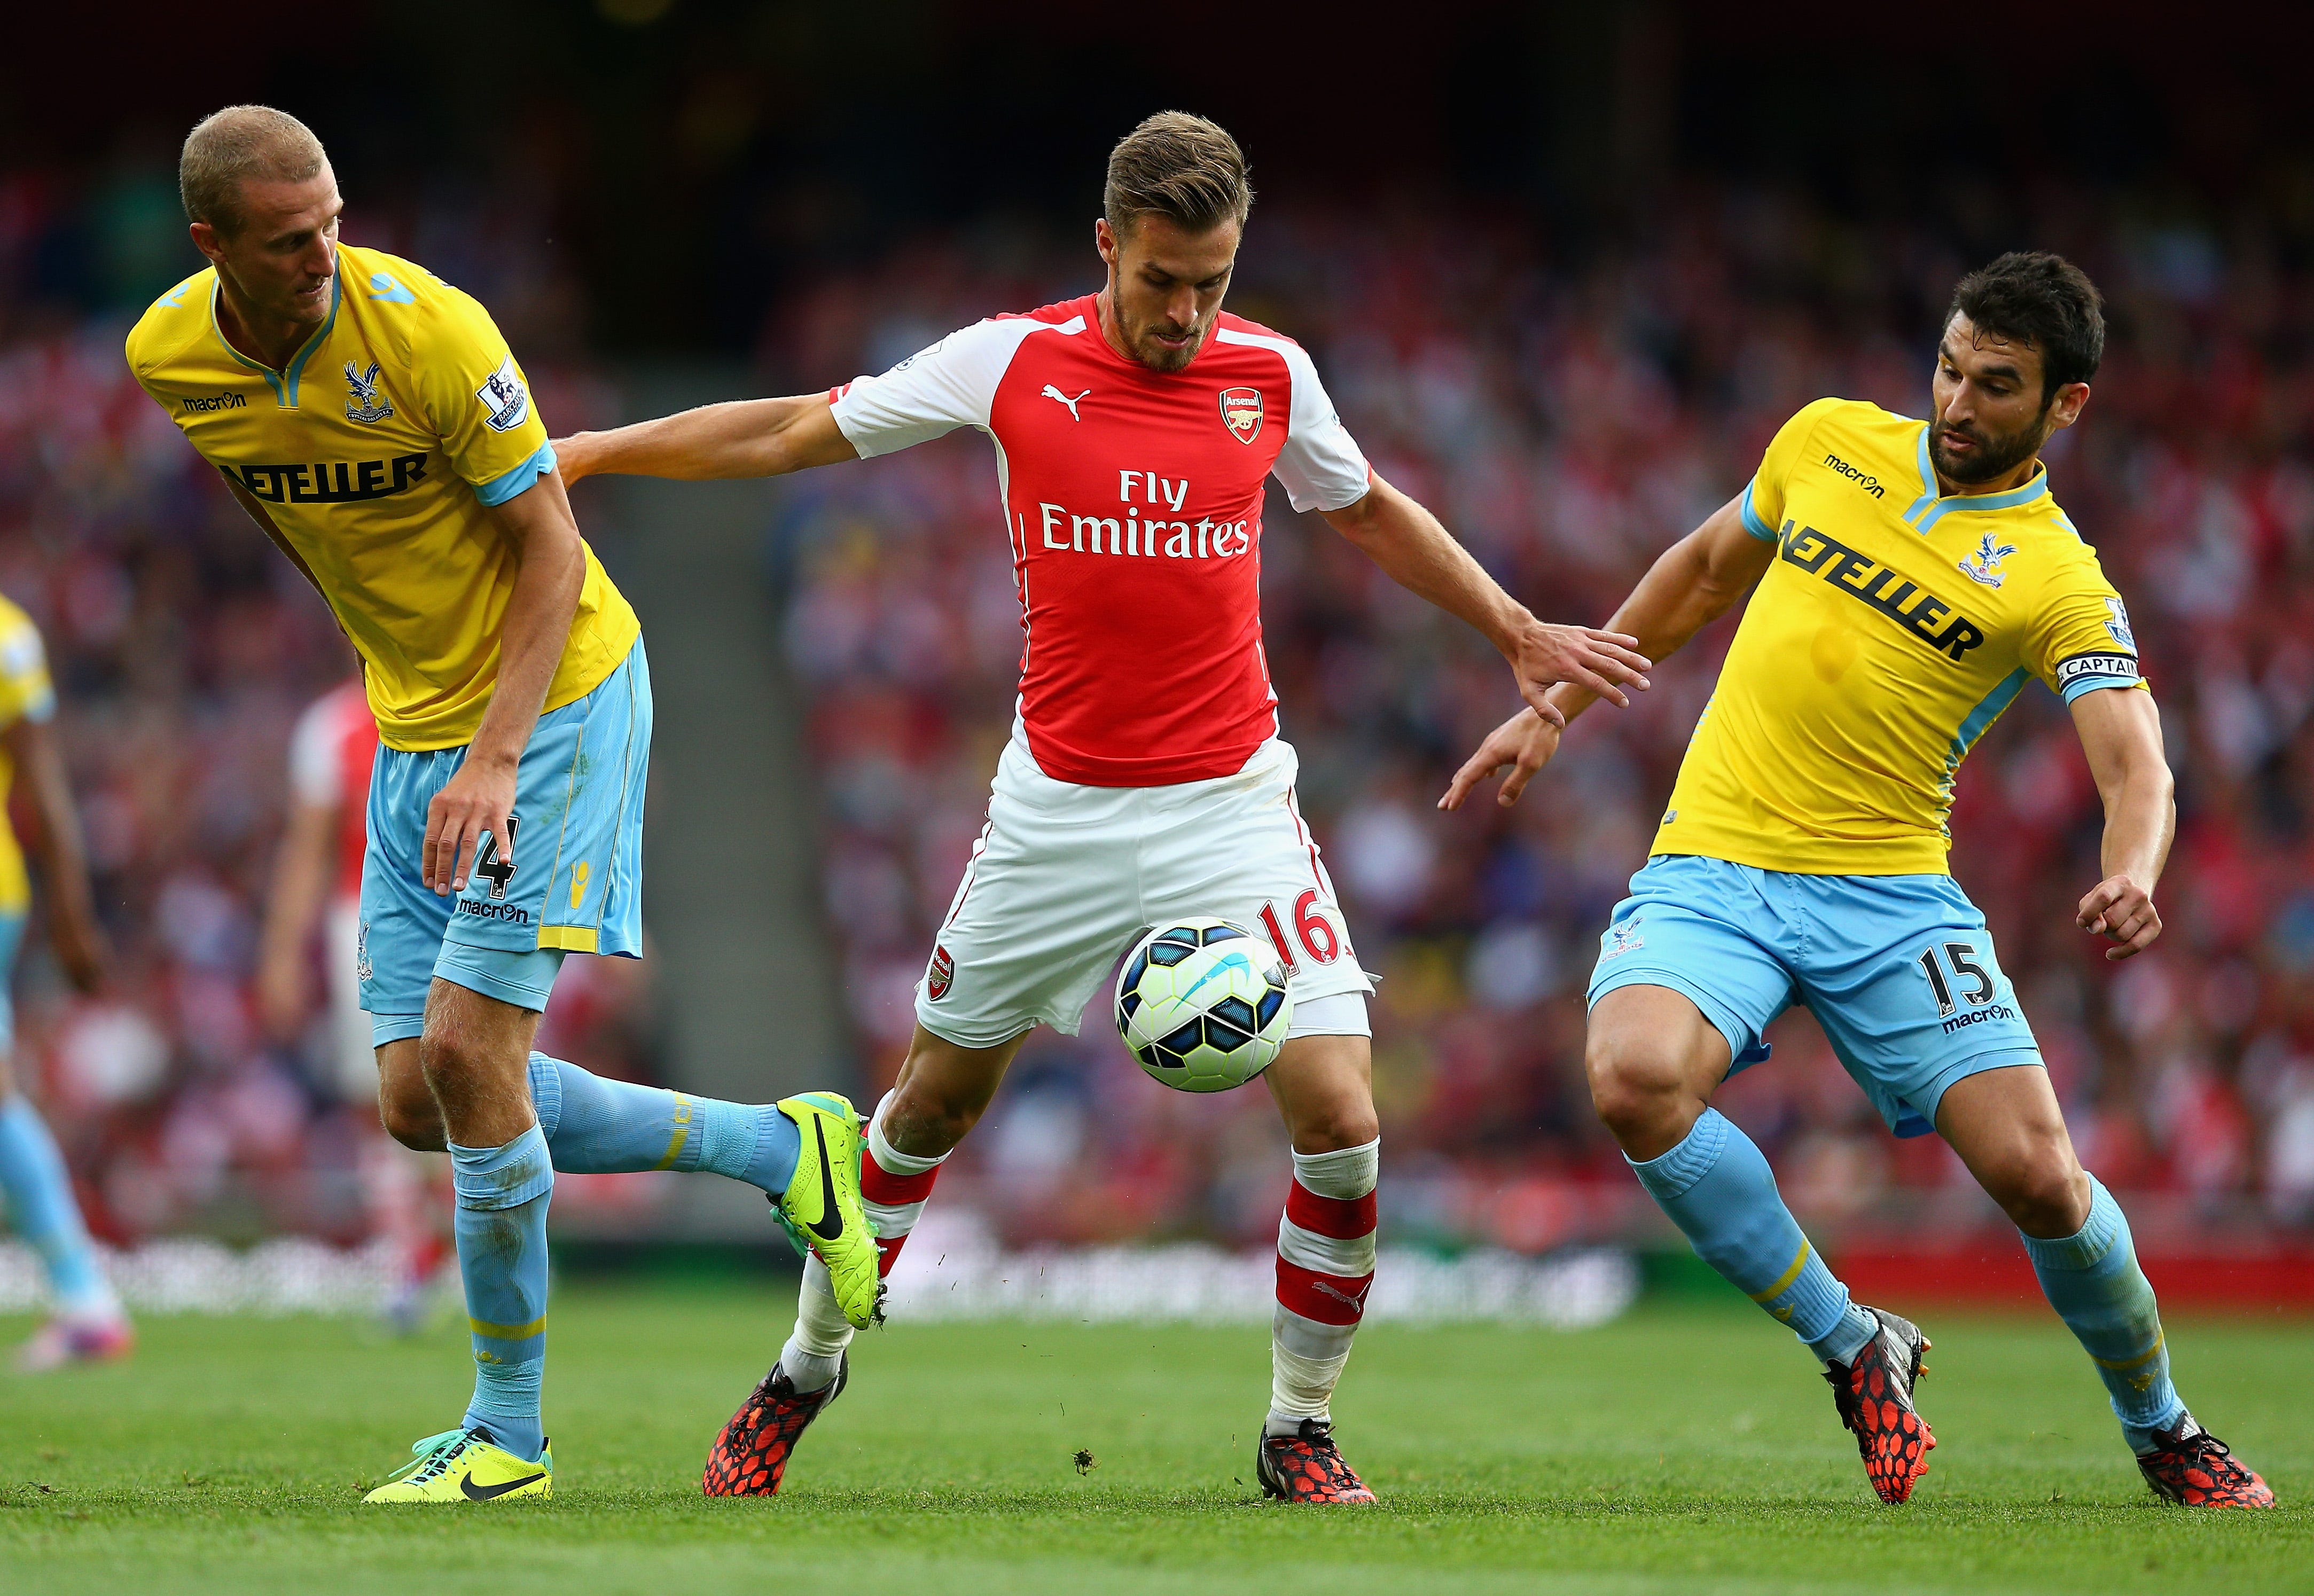 Aaron Ramsey, Arsenal v Crystal Palace, Premier League, 08162014